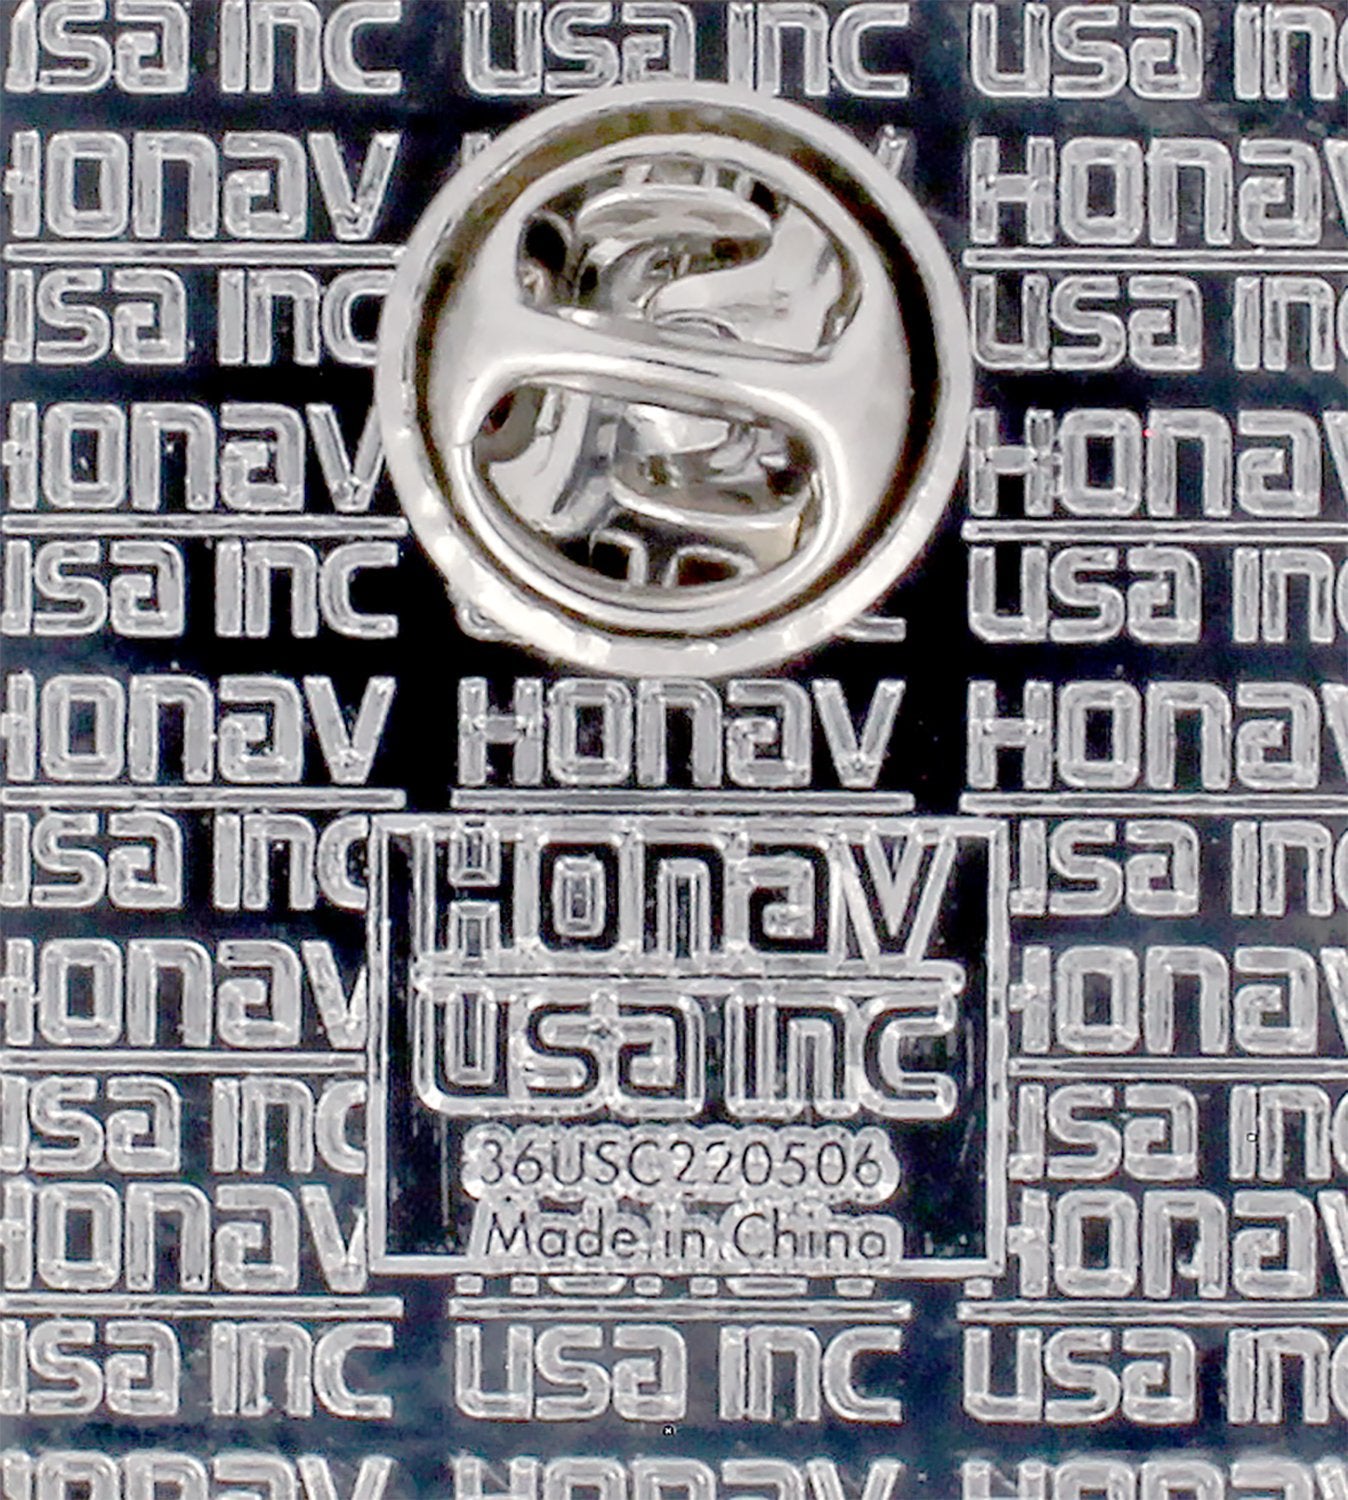 Team USA Olympics Shield Pin